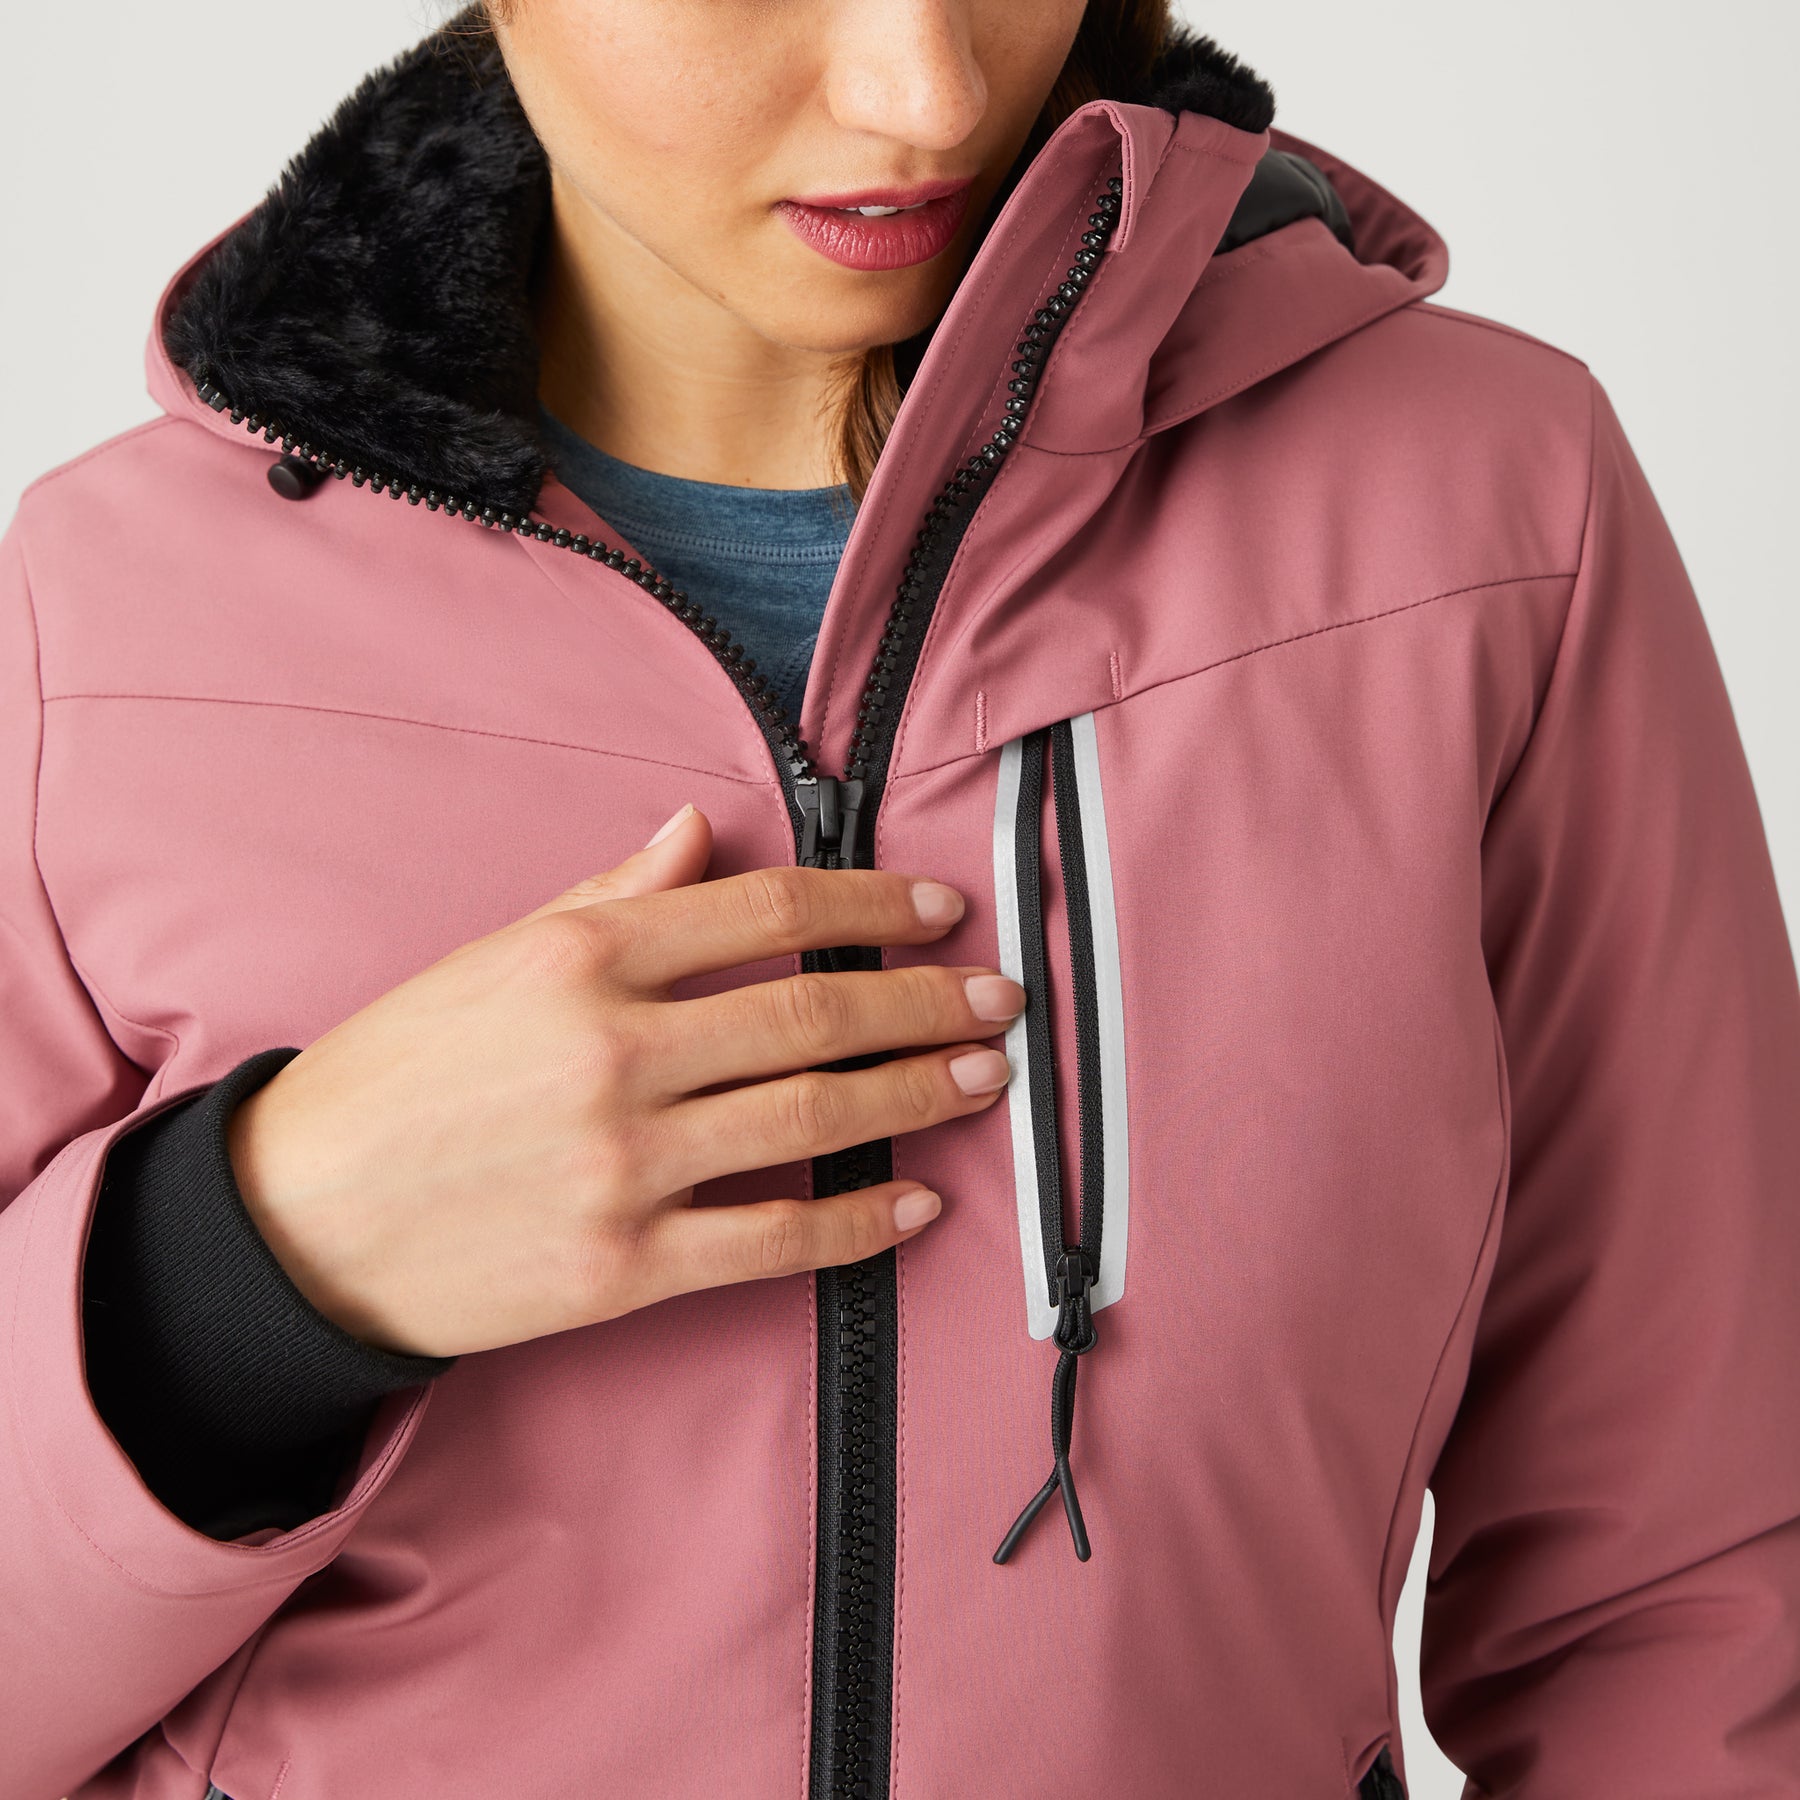 Fashion Ski Jacket, Softshell Jackets with Seamless Pocket - China